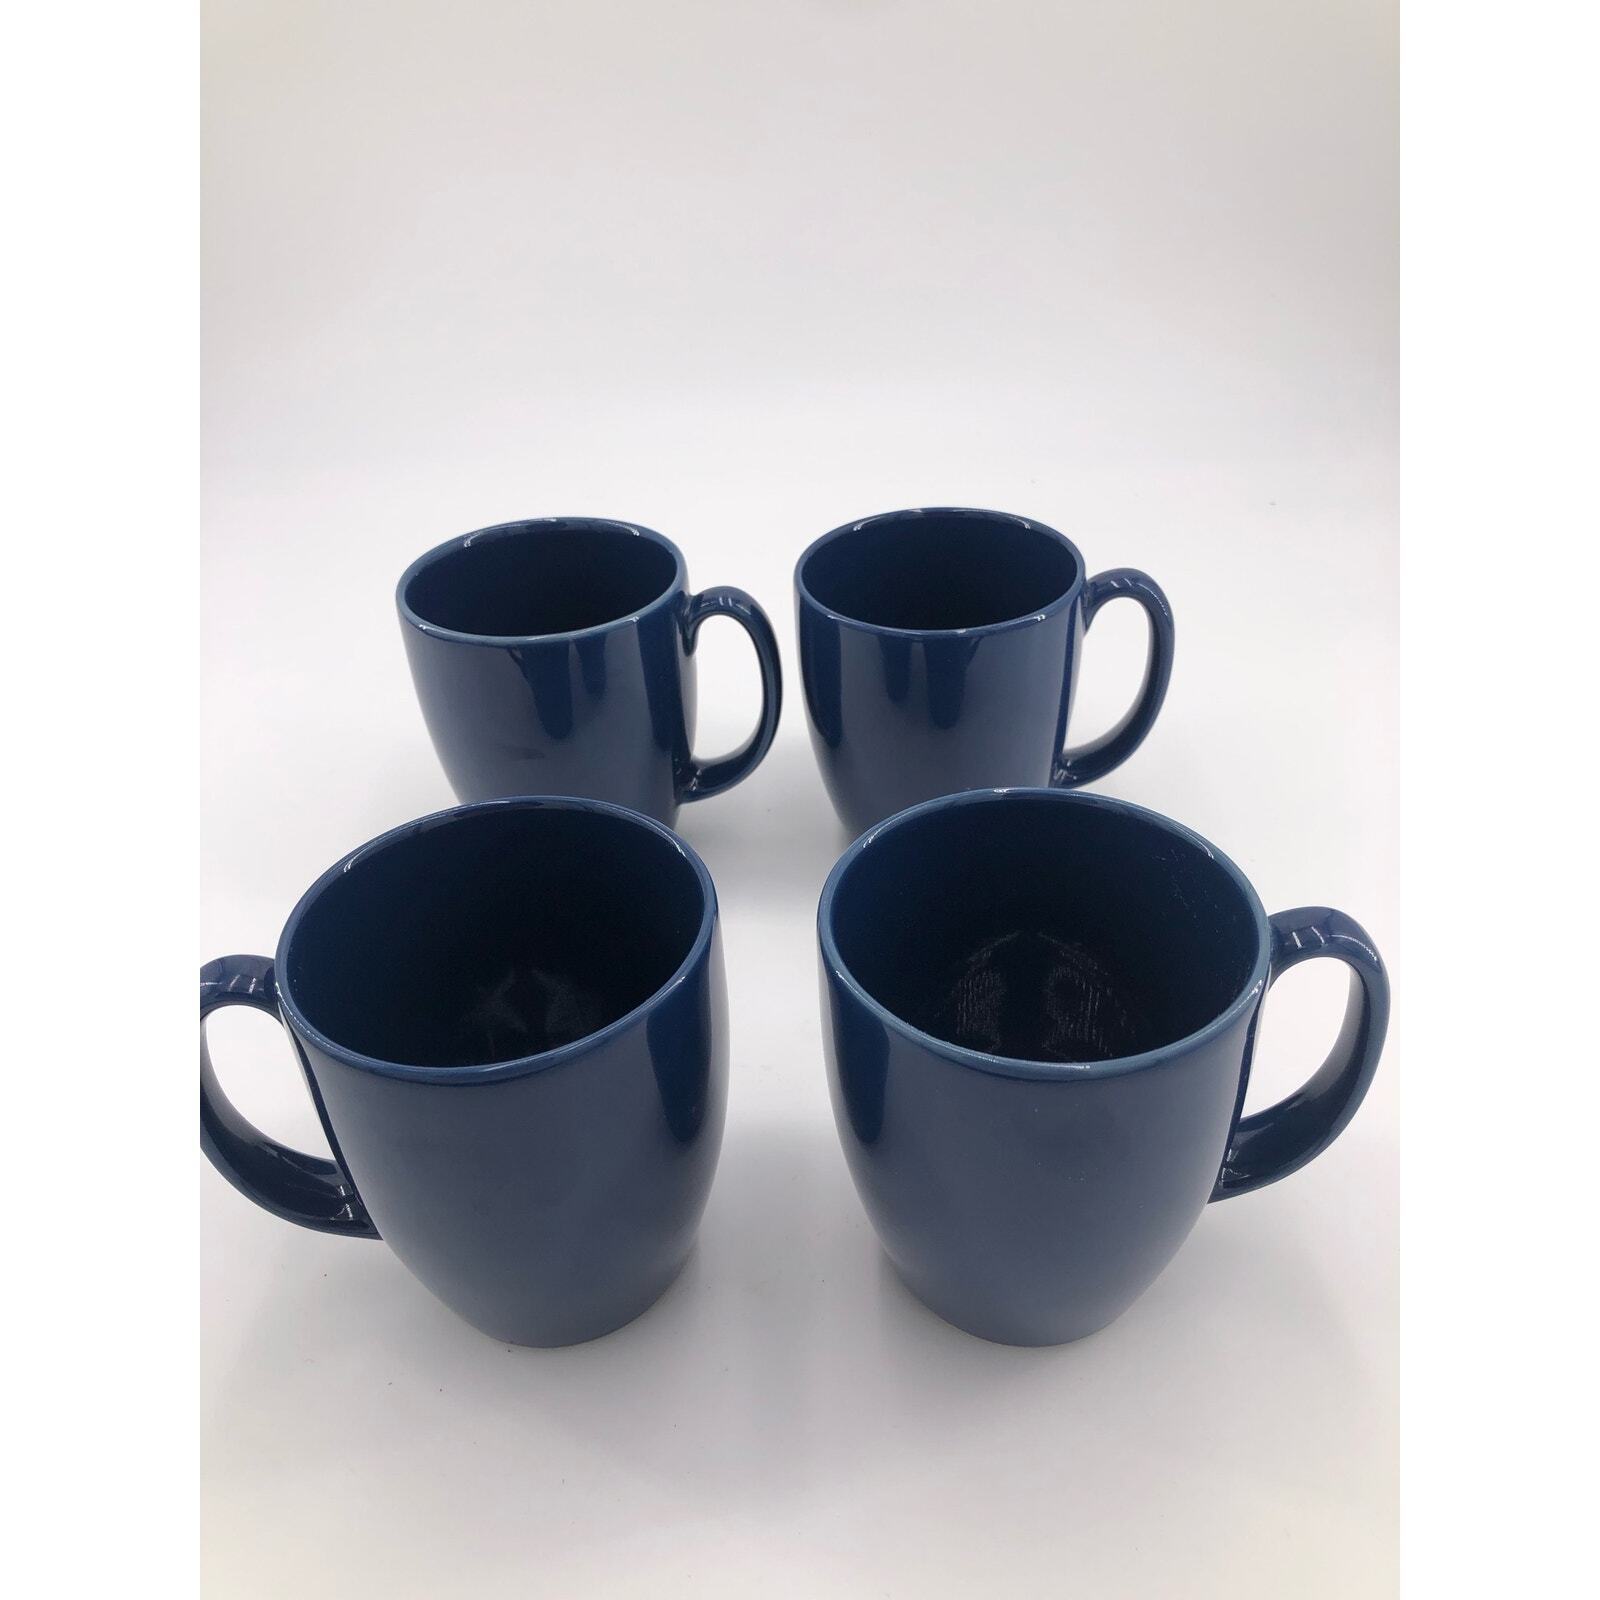 Corelli Stoneware Mugs Set of 4 Cobalt Blue Coffee Cups VTG